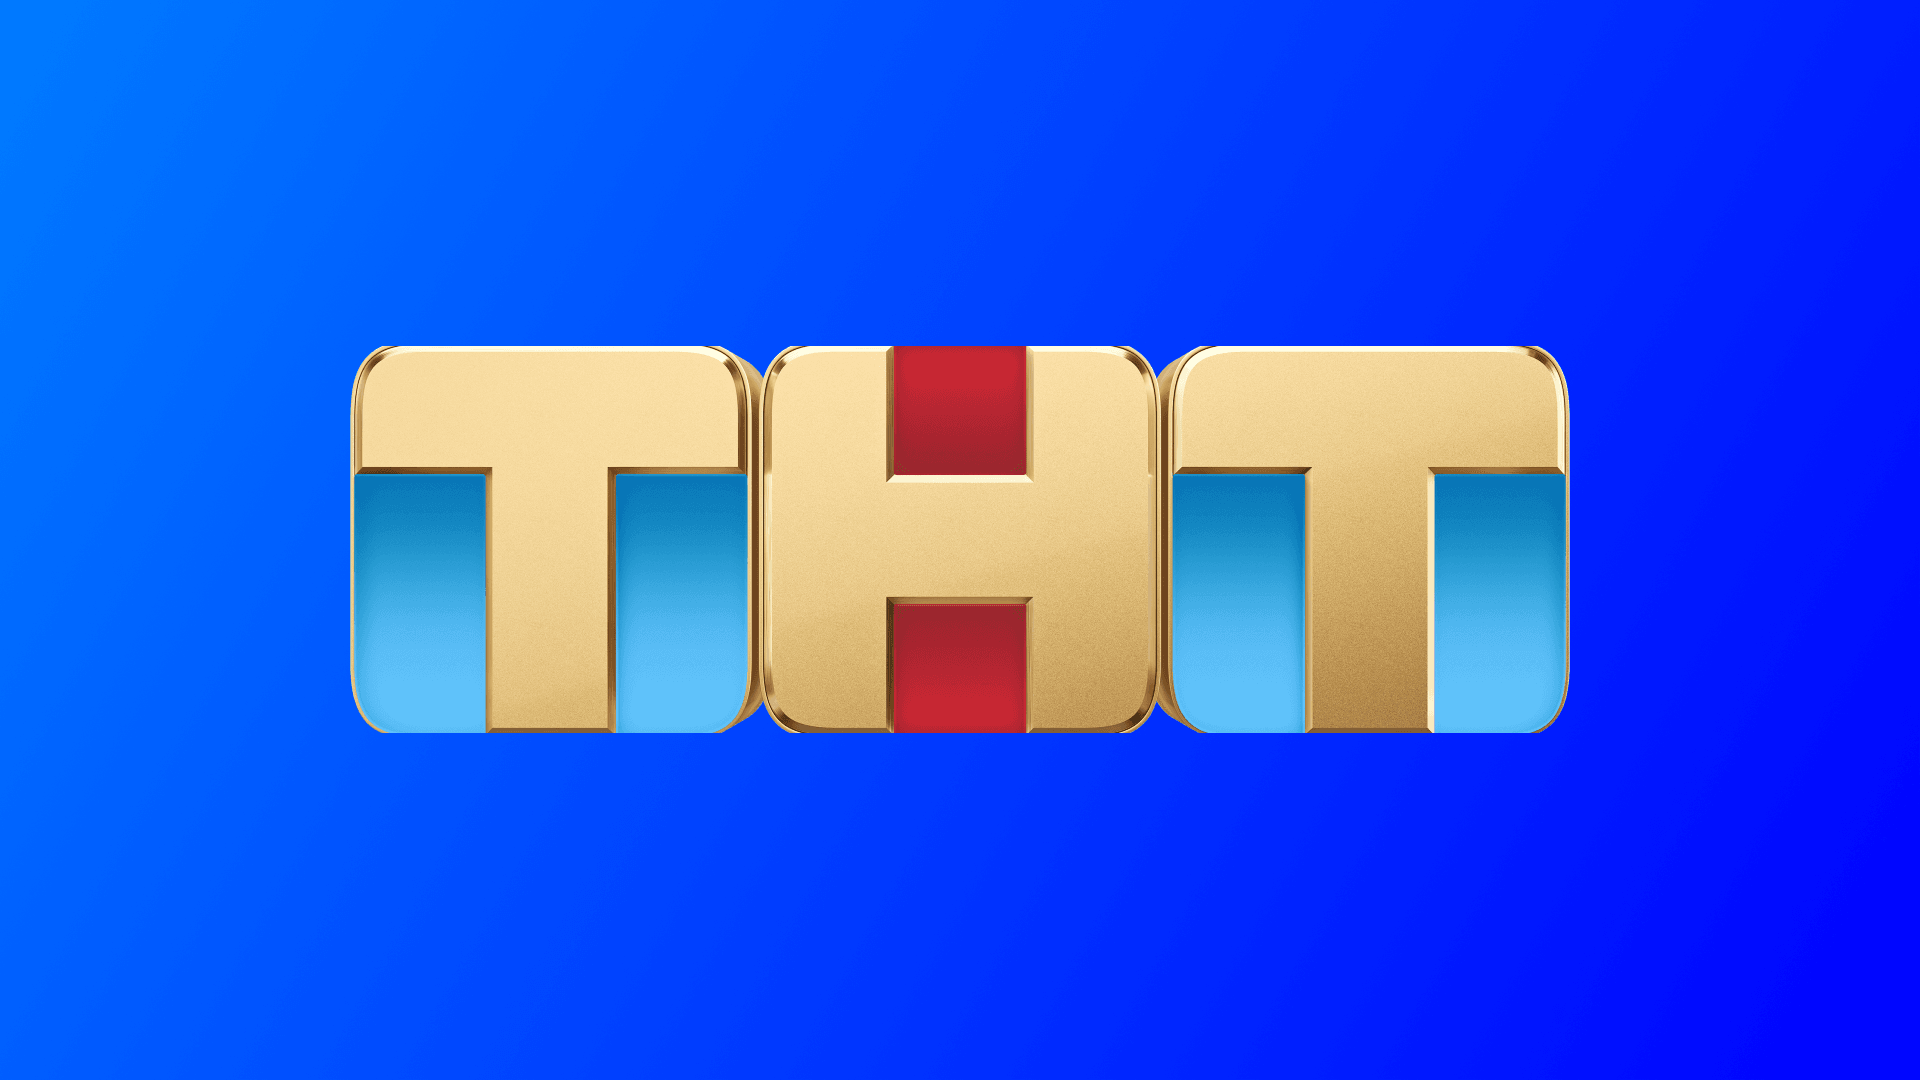 ТНТ. Телеканал ТНТ. Логотип канала ТНТ. Тет (Телеканал). Смотрю тнт видео